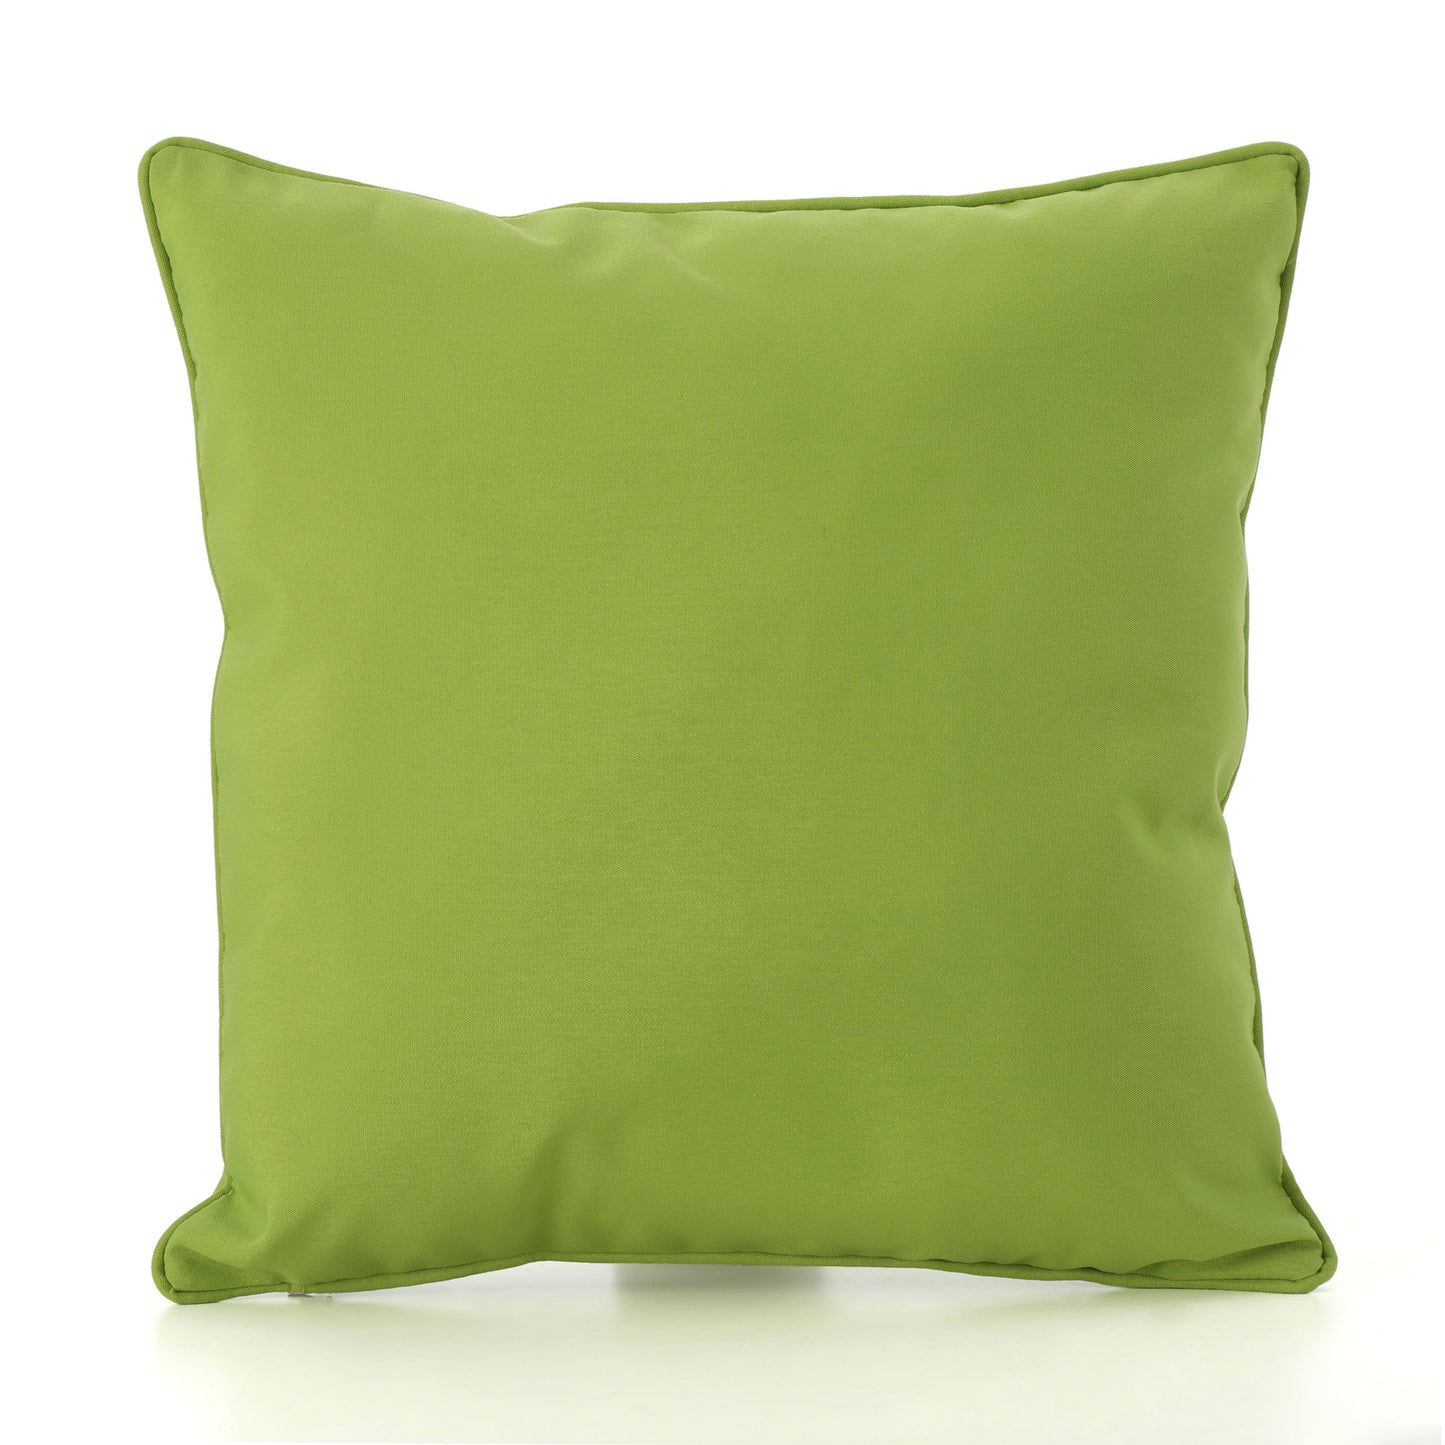 Corona Outdoor Patio Water Resistant Pillow Sets